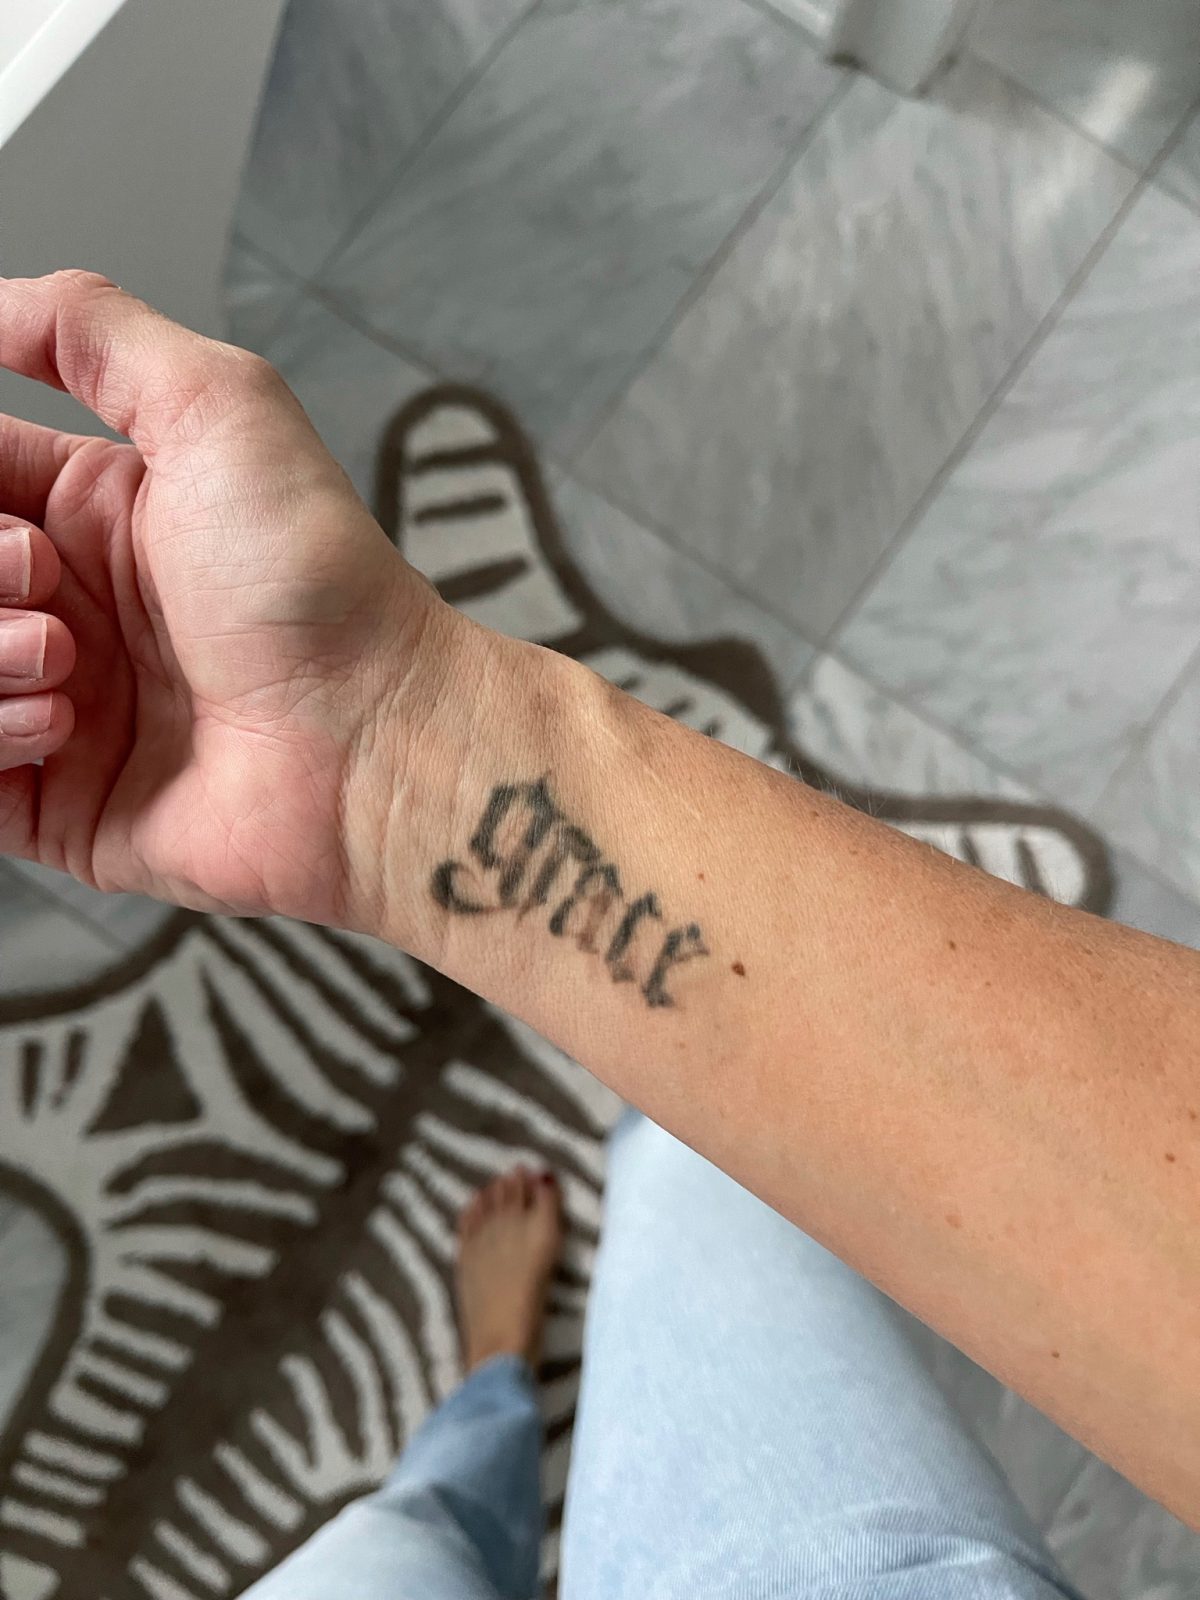 Tattoo removal update: "grace" tattoo on Suzanne's wrist